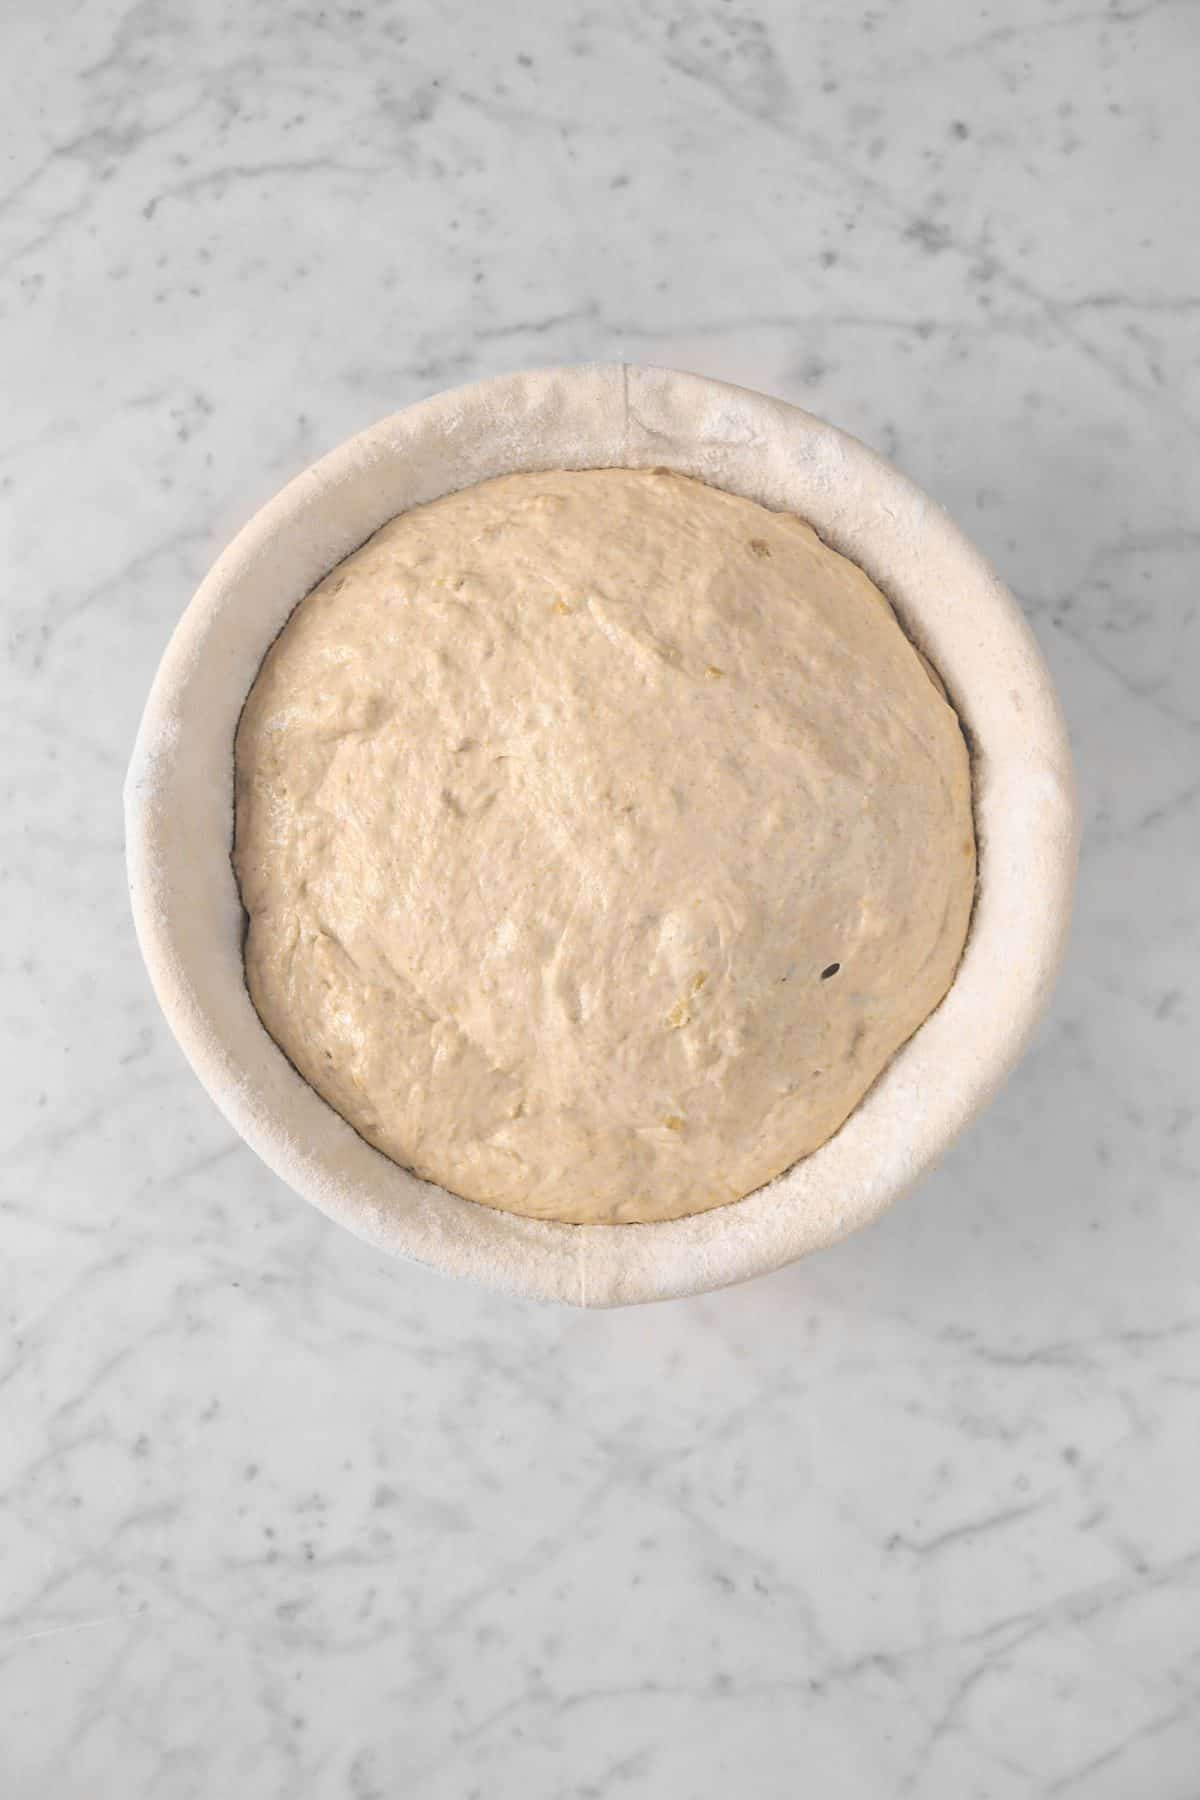 dough doubled in bulk in a banneton